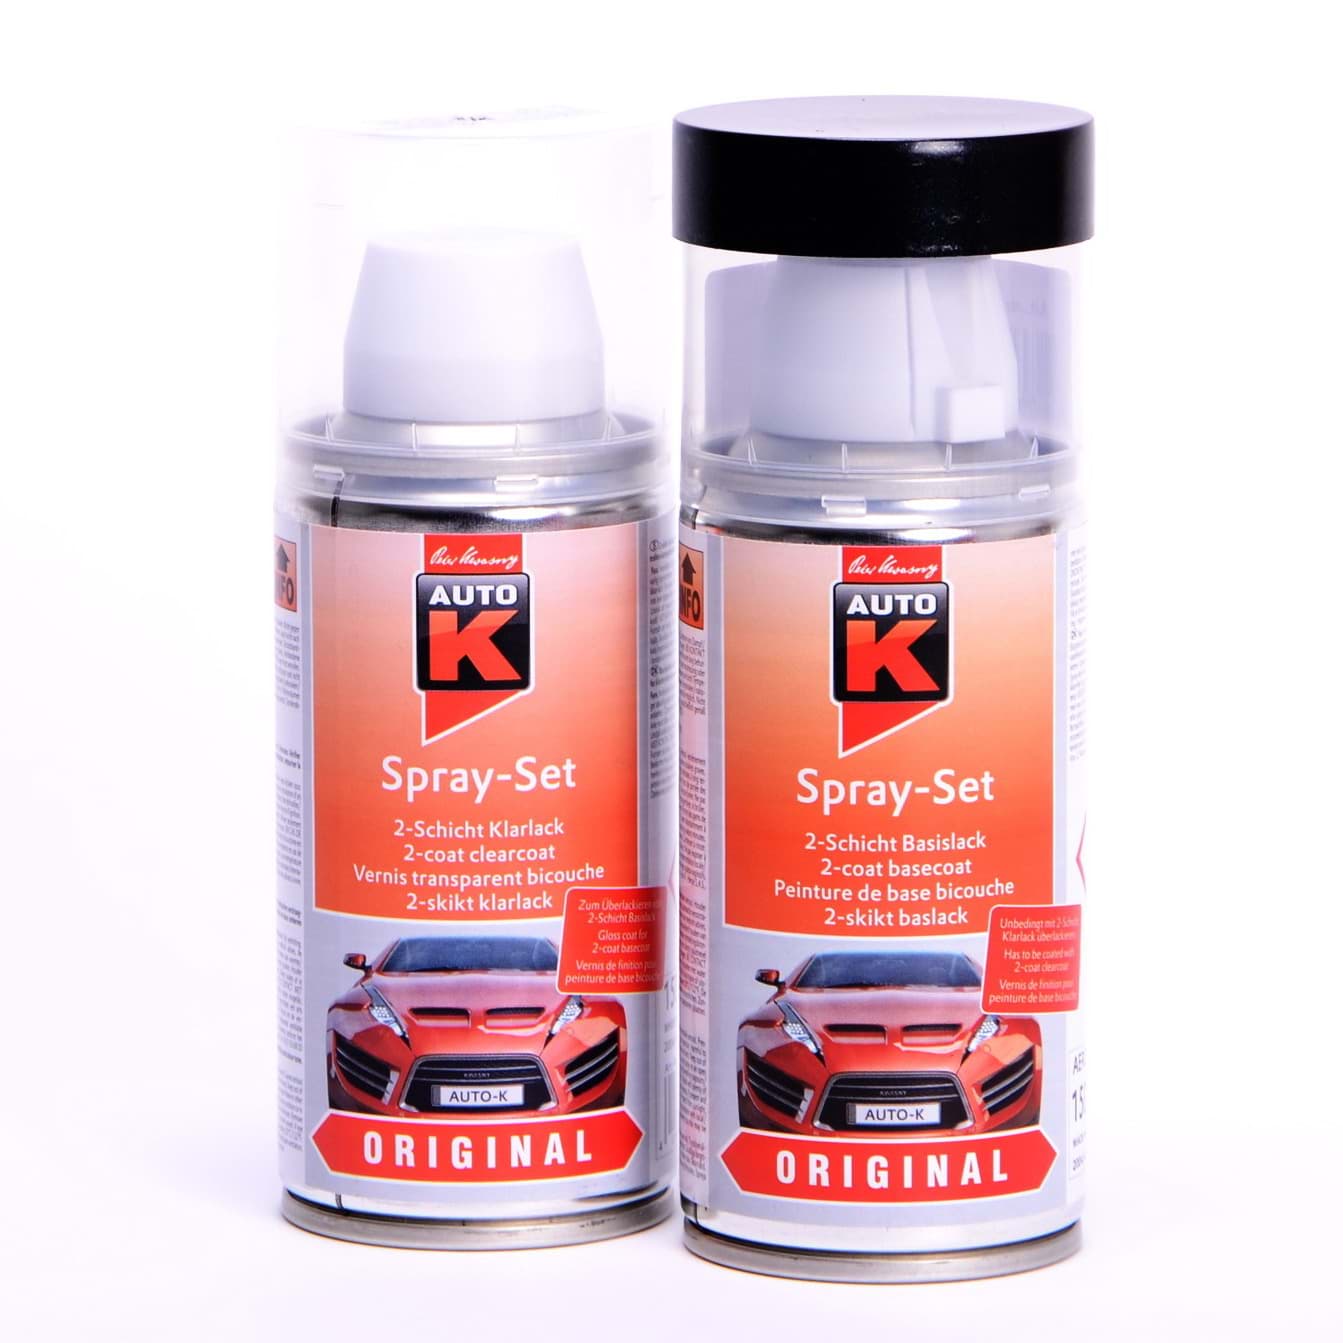 Auto-K Spray-Set Autolack für Opel 147 Starsilber II met 21469 resmi